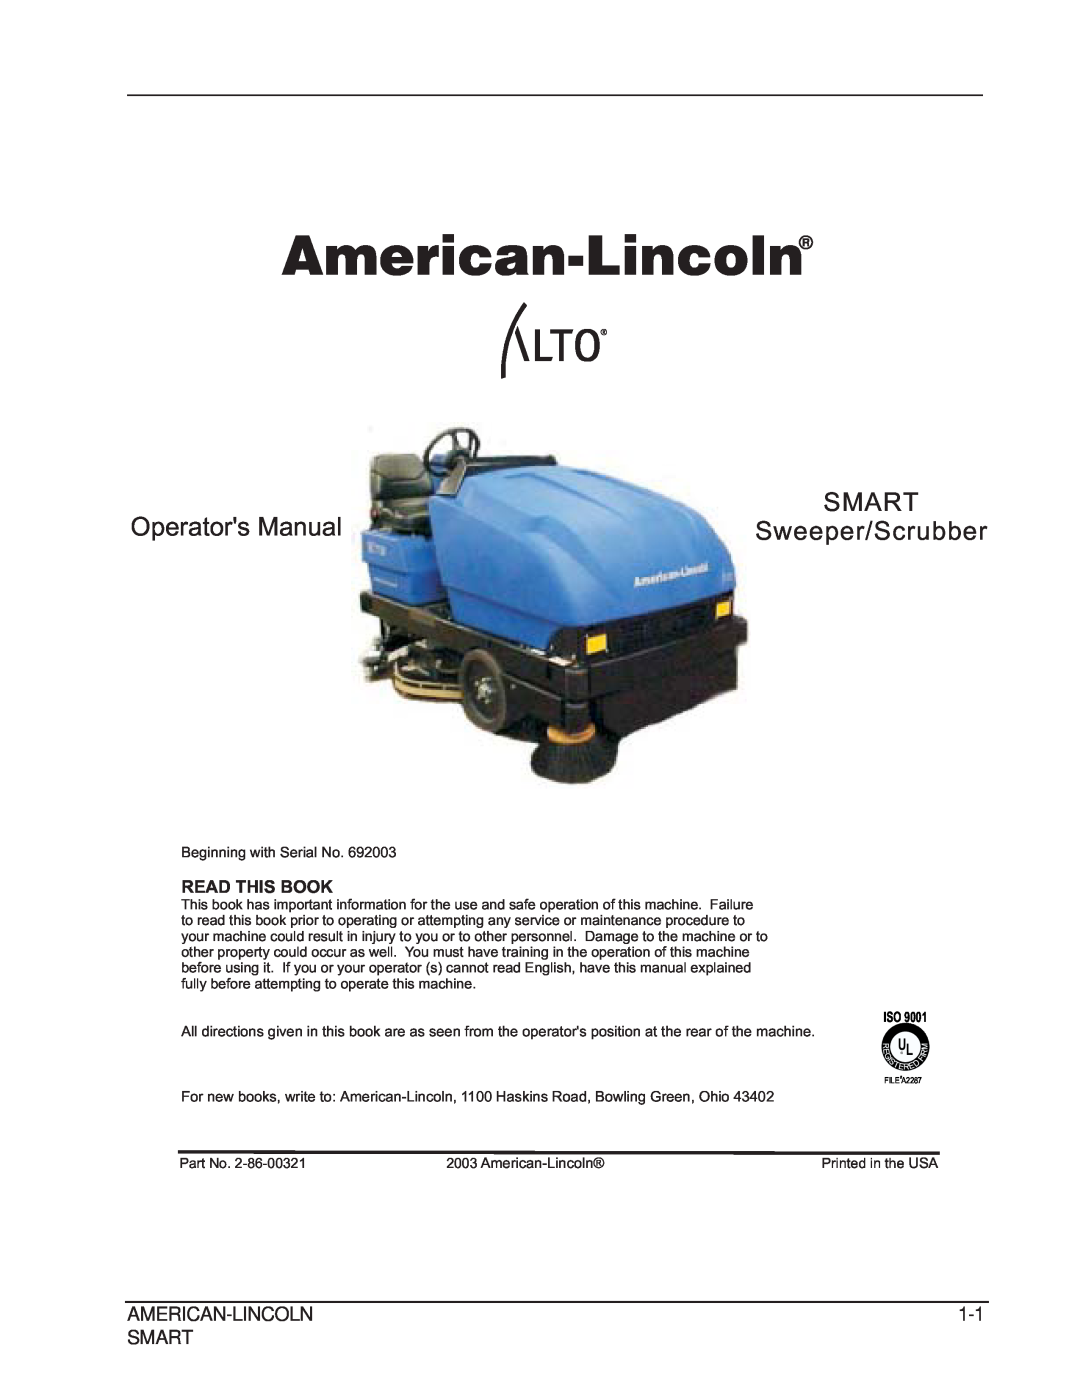 Nilfisk-ALTO 692003 manual American-Lincoln, Smart, Operators Manual, Sweeper/Scrubber, Read This Book, Part No 